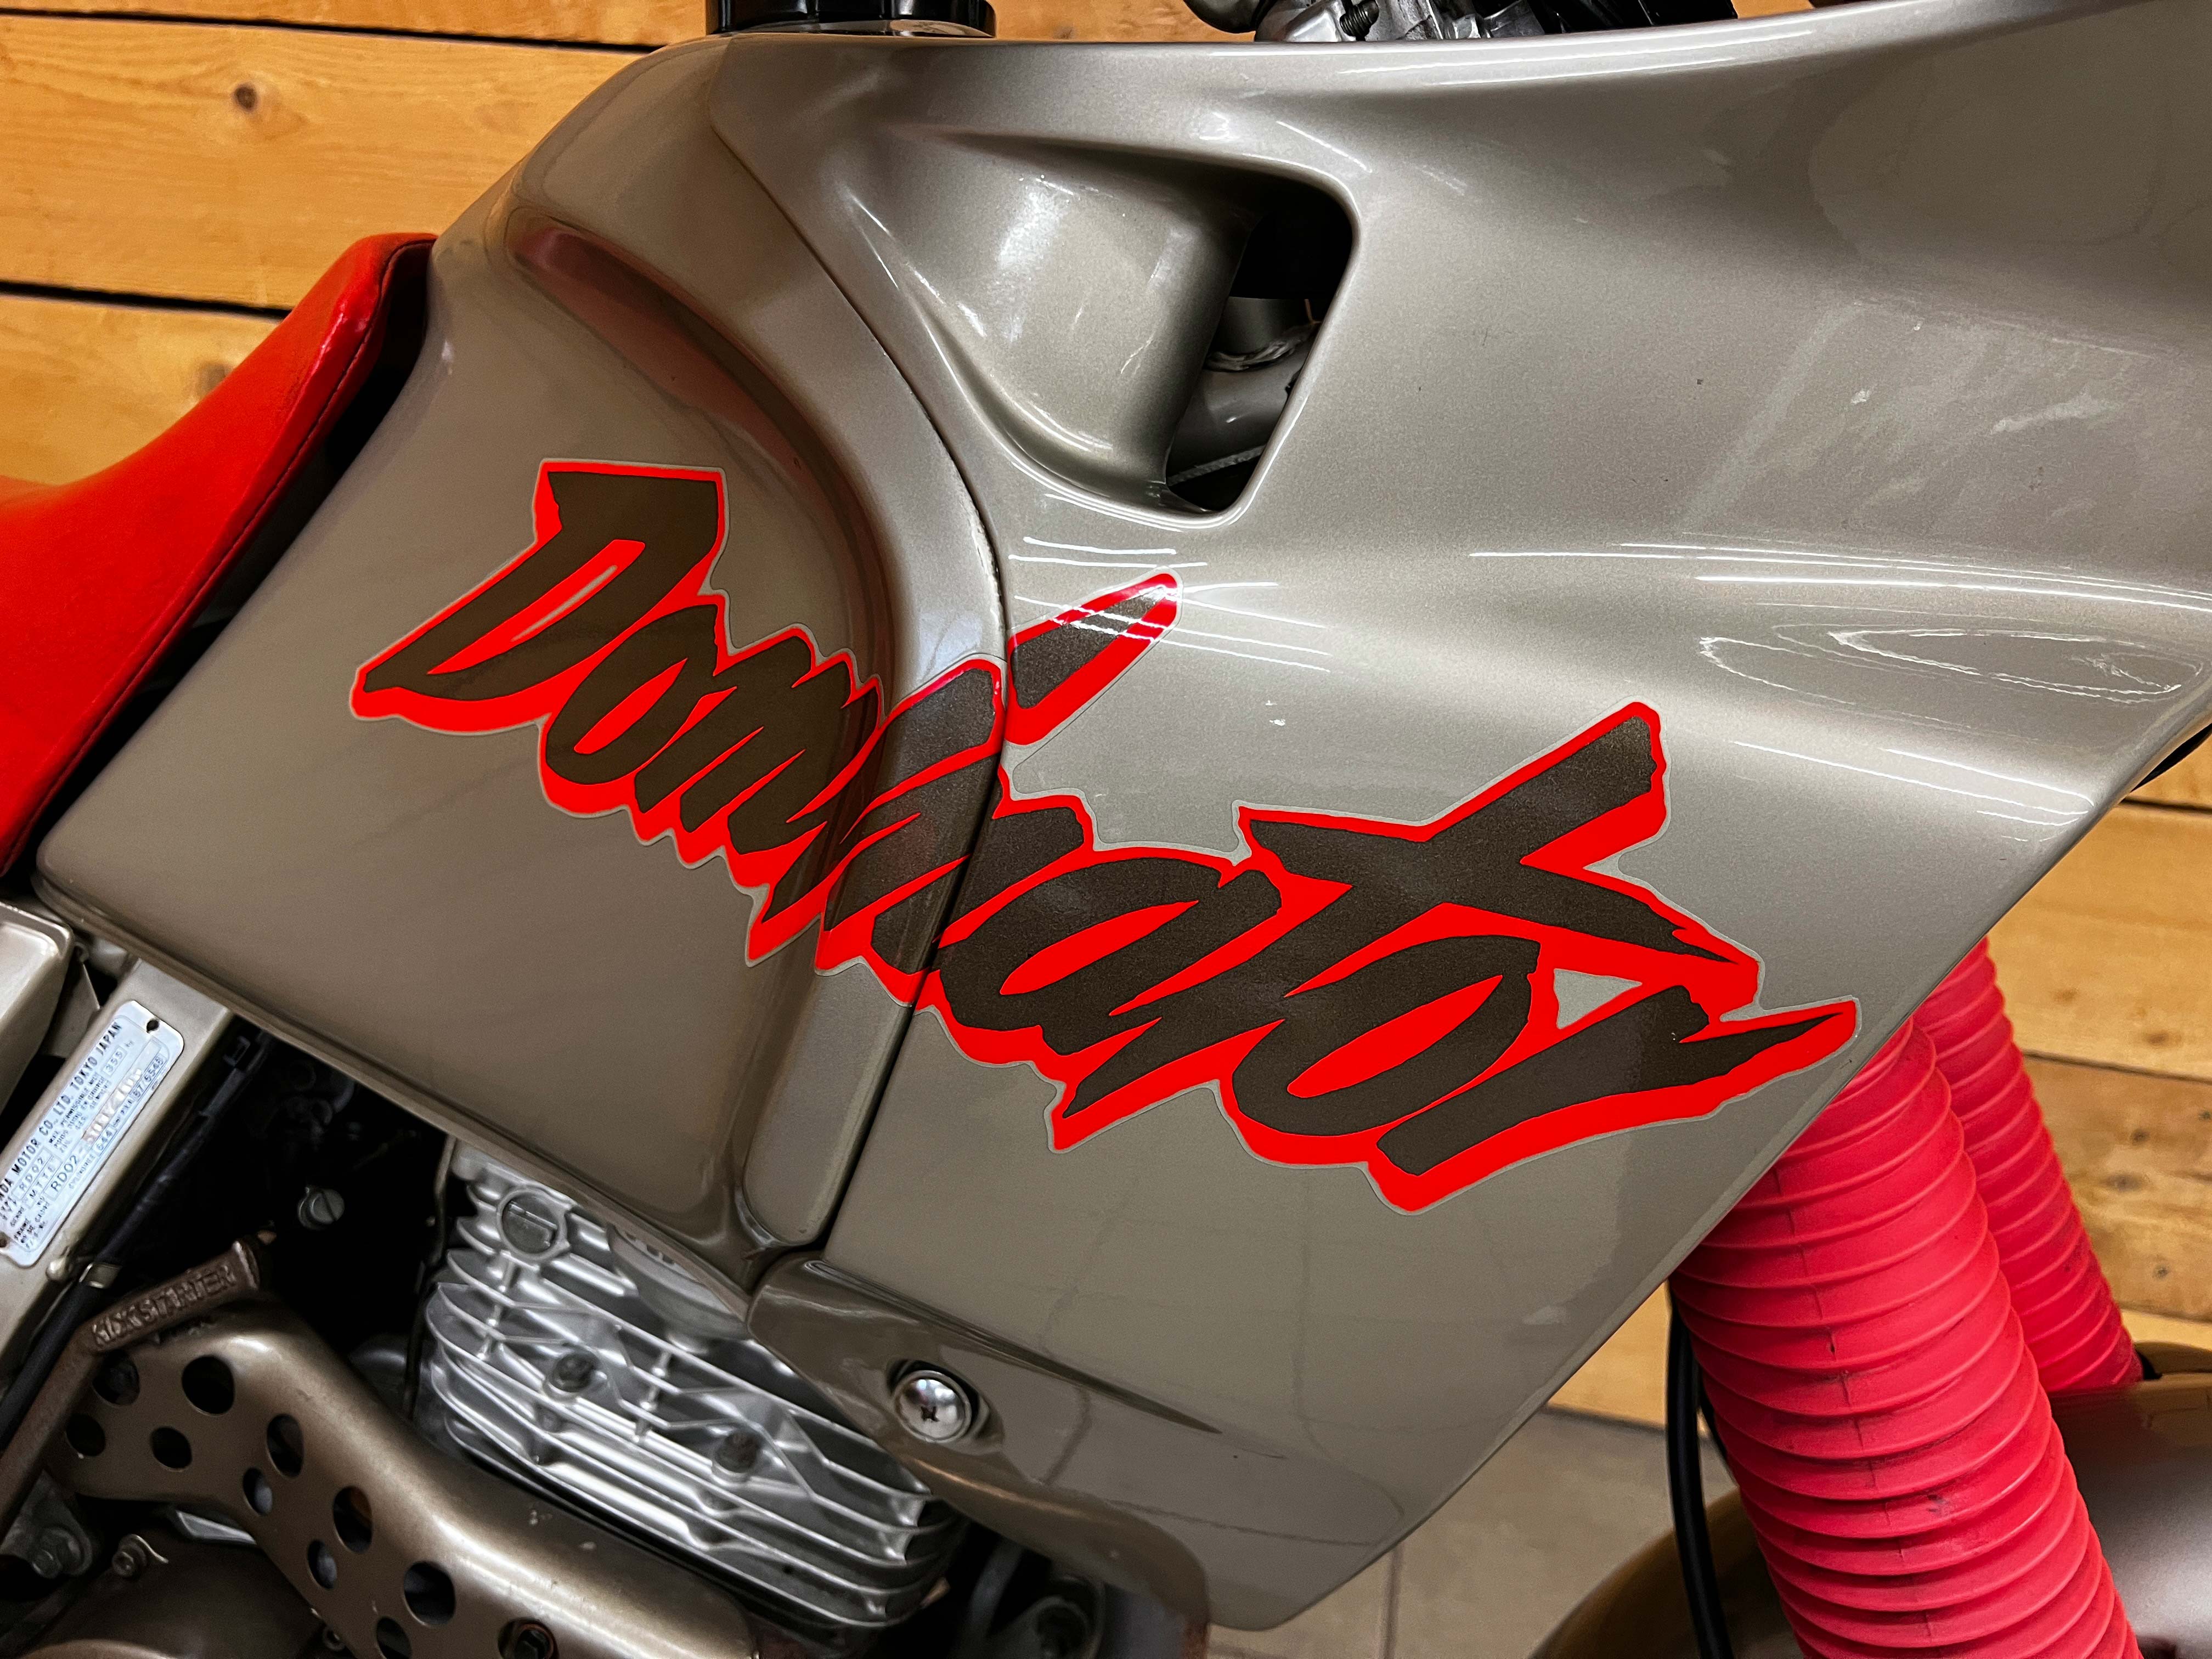 Honda_dominator_Cezanne_classic_Motorcycle-152.jpg